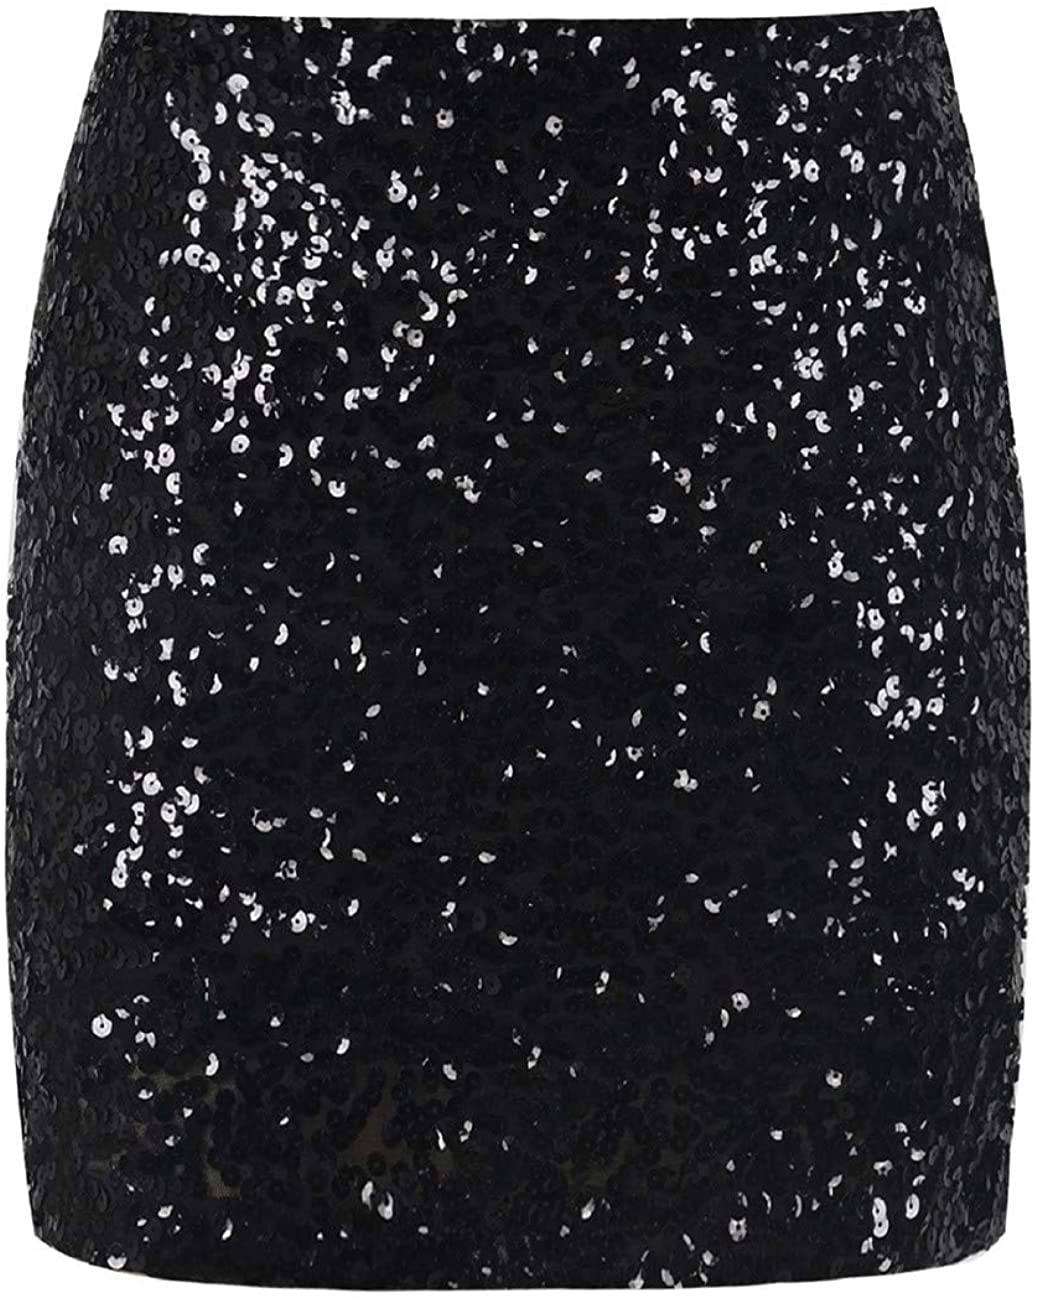 NEXT BNWT Size 20-22 Women's Black Faux Leather Coated Zip Mini Pencil Skirt